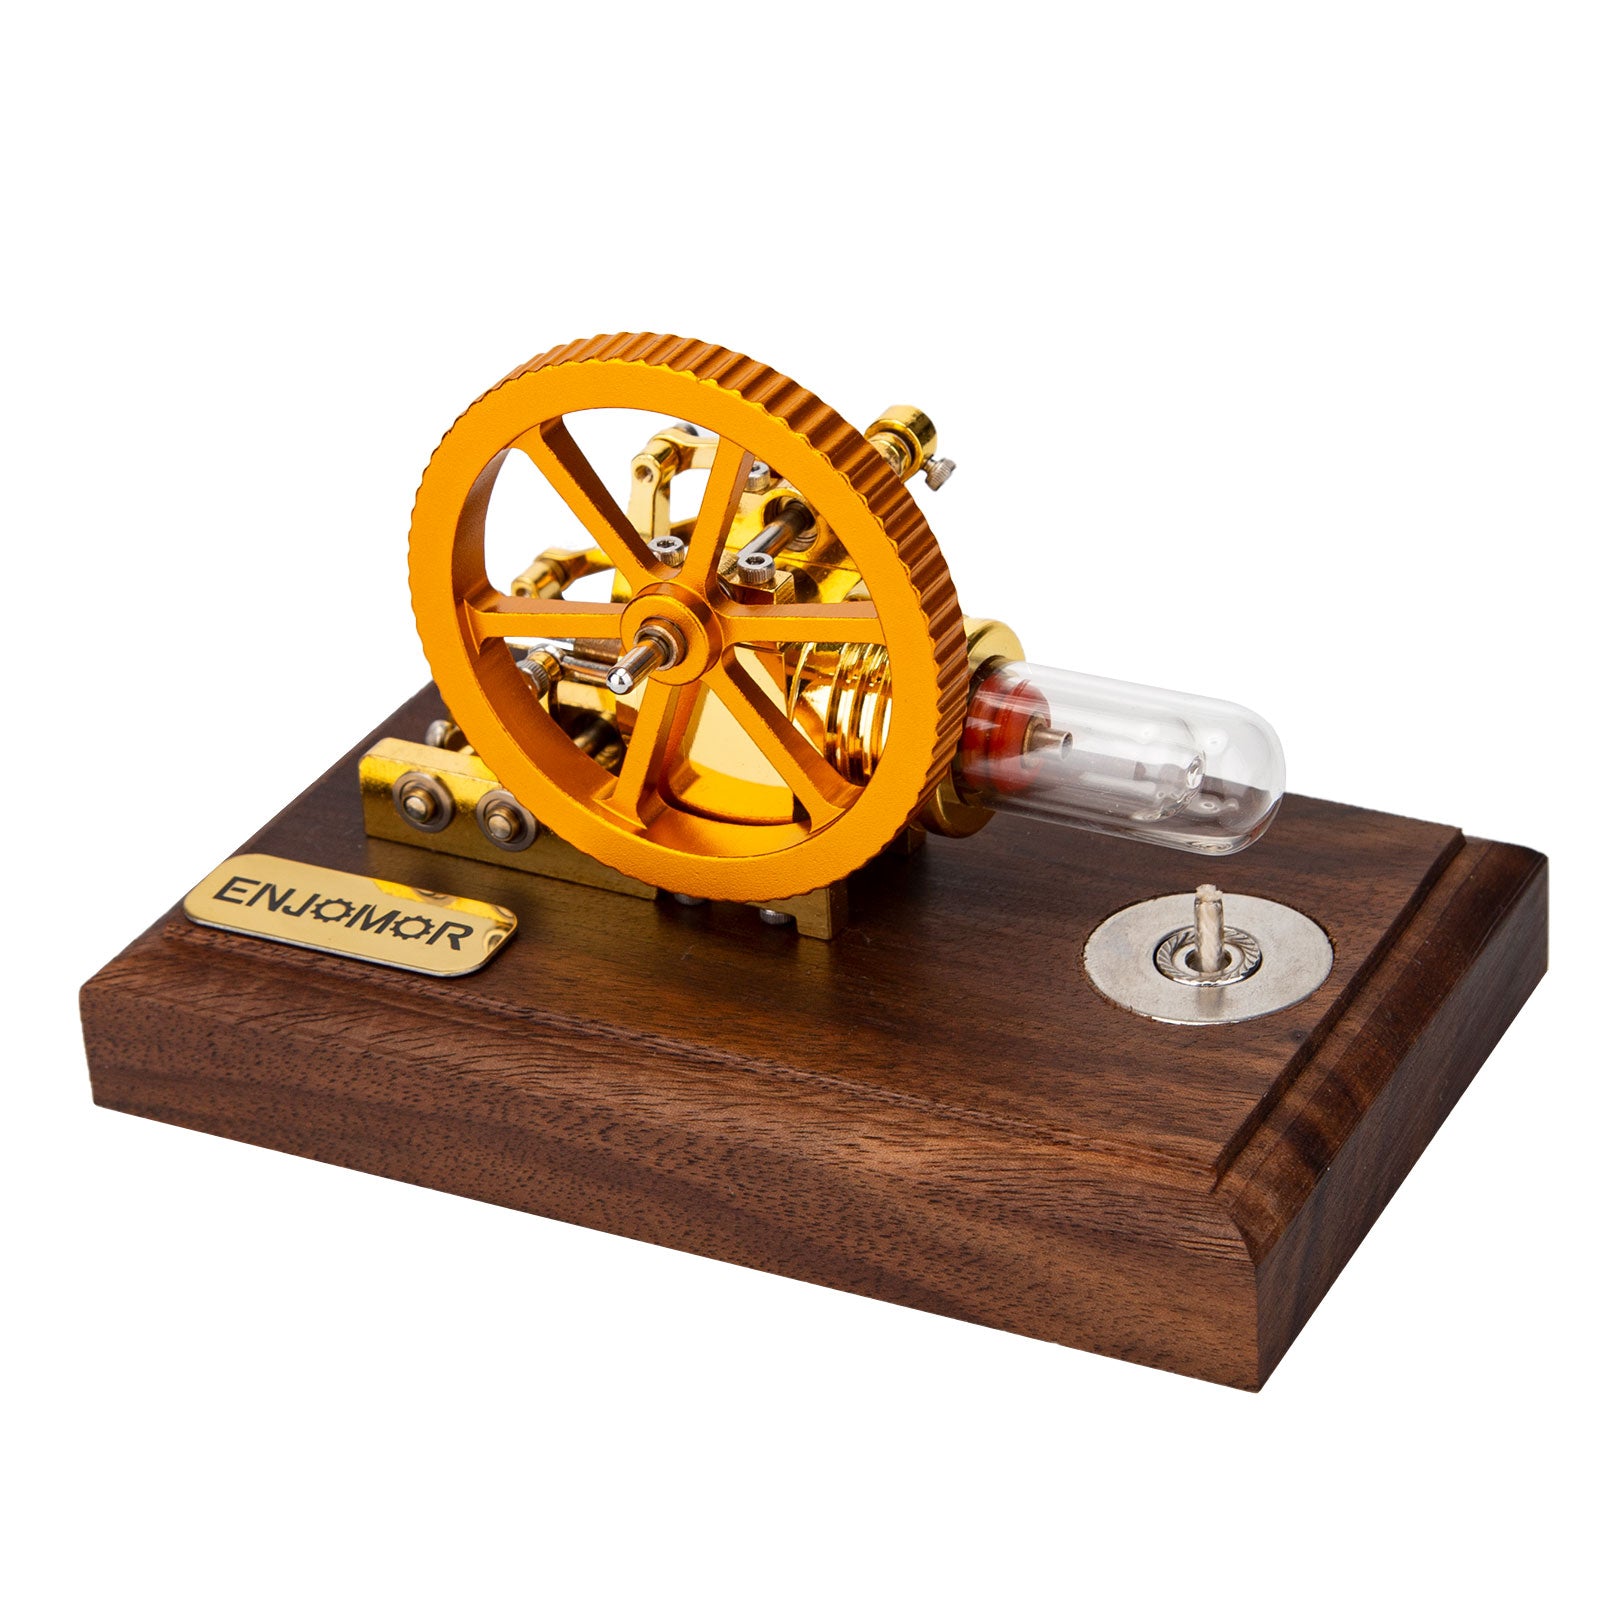 ENJOMOR Mini Gamma Hot-air Stirling Engine Model Educational Toys Gifts